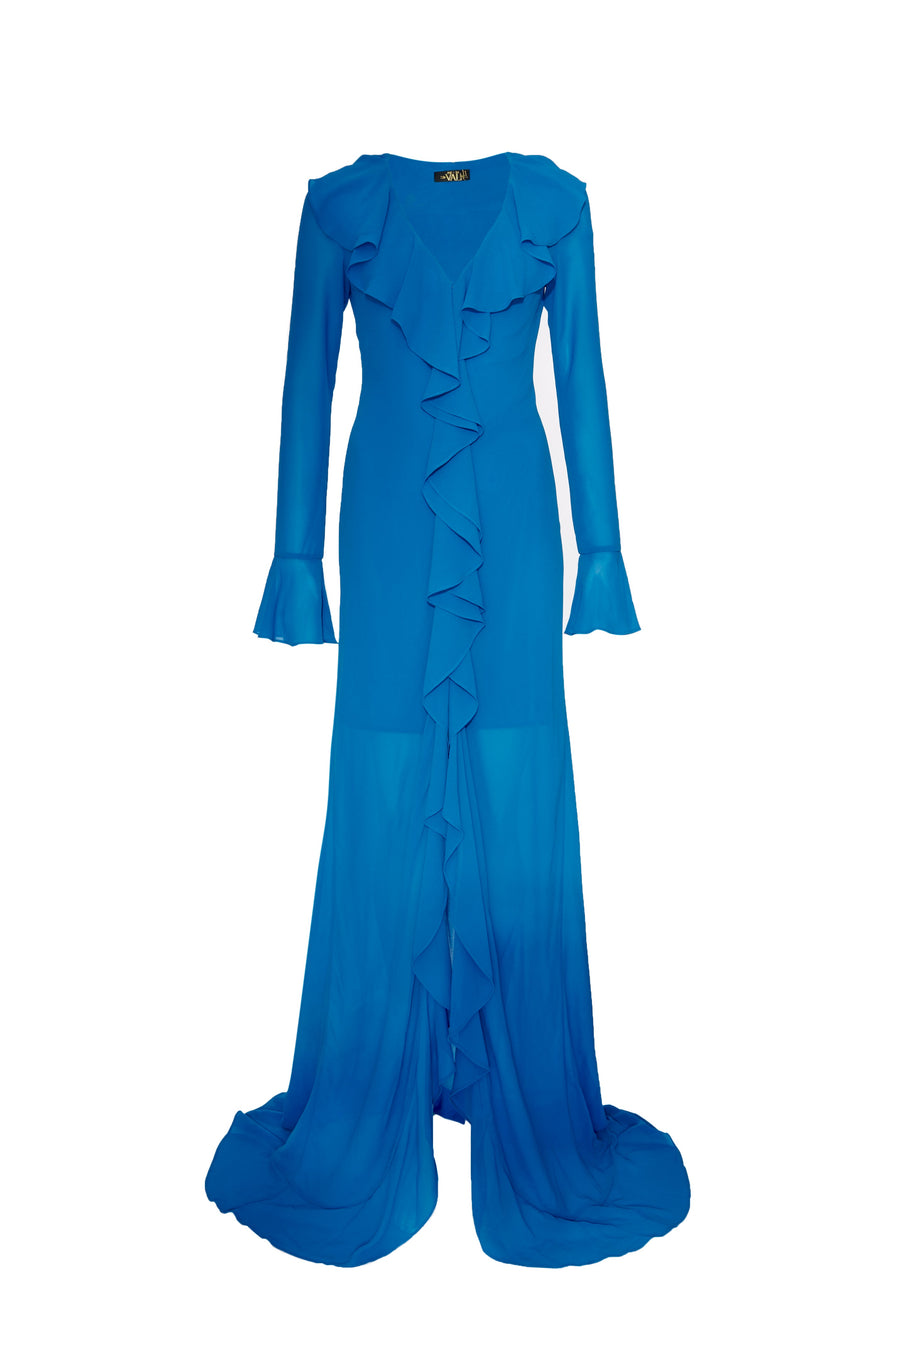 TANGERINE MAXI DRESS IN BLUE CHIFFON - De La Vali